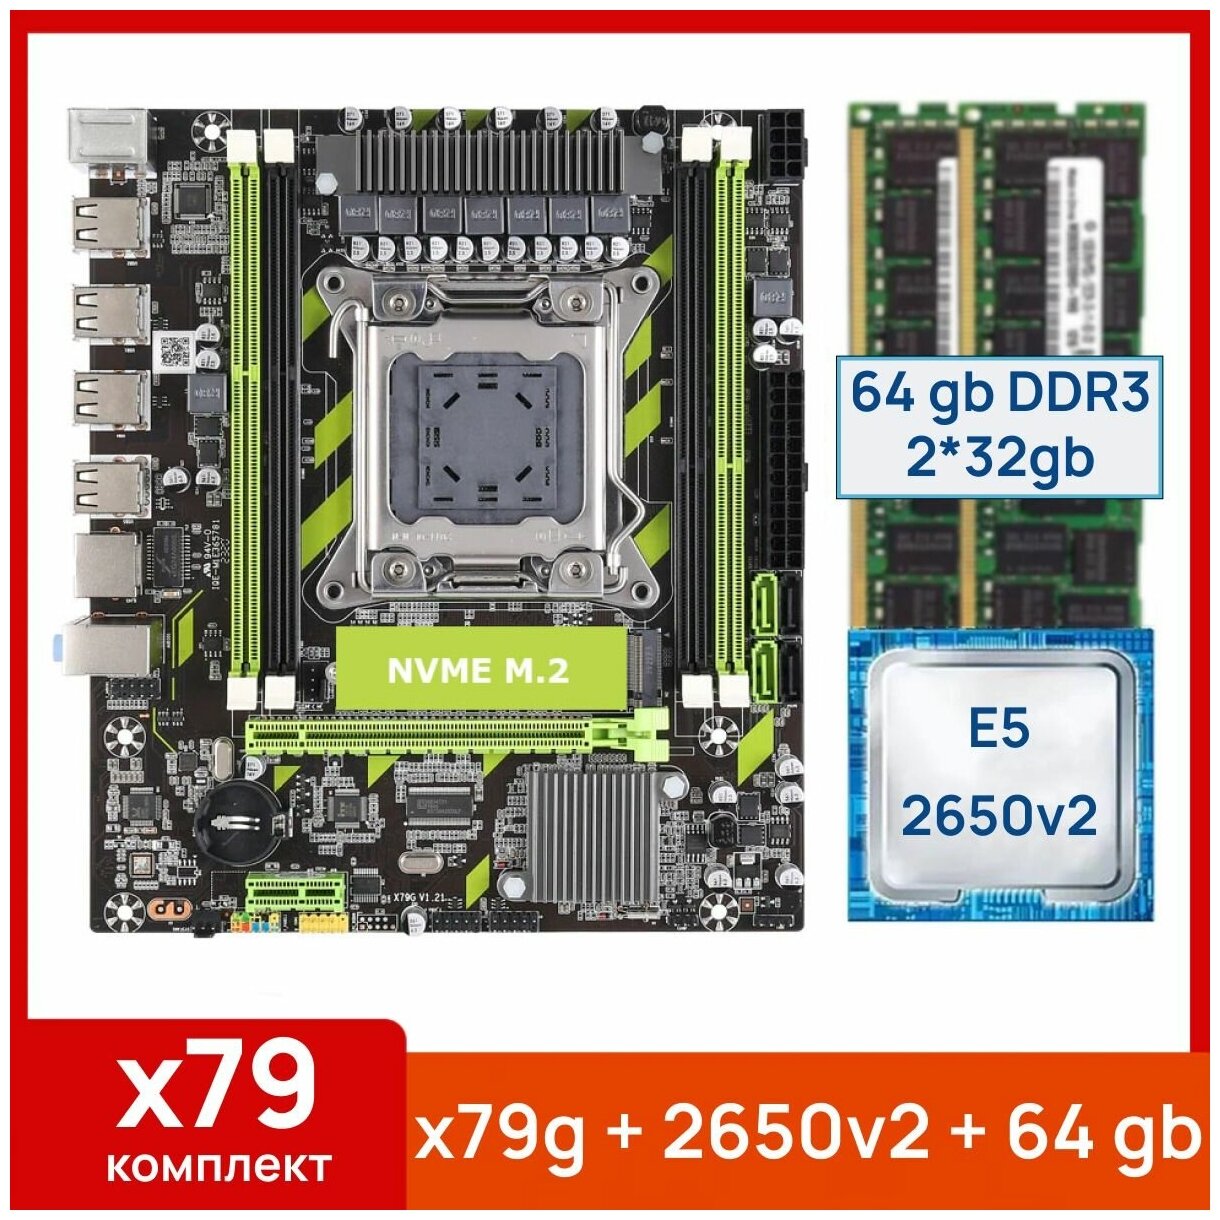 Комплект: Atermiter x79g + Xeon E5 2650v2 + 64 gb(2x32gb) DDR3 ecc reg